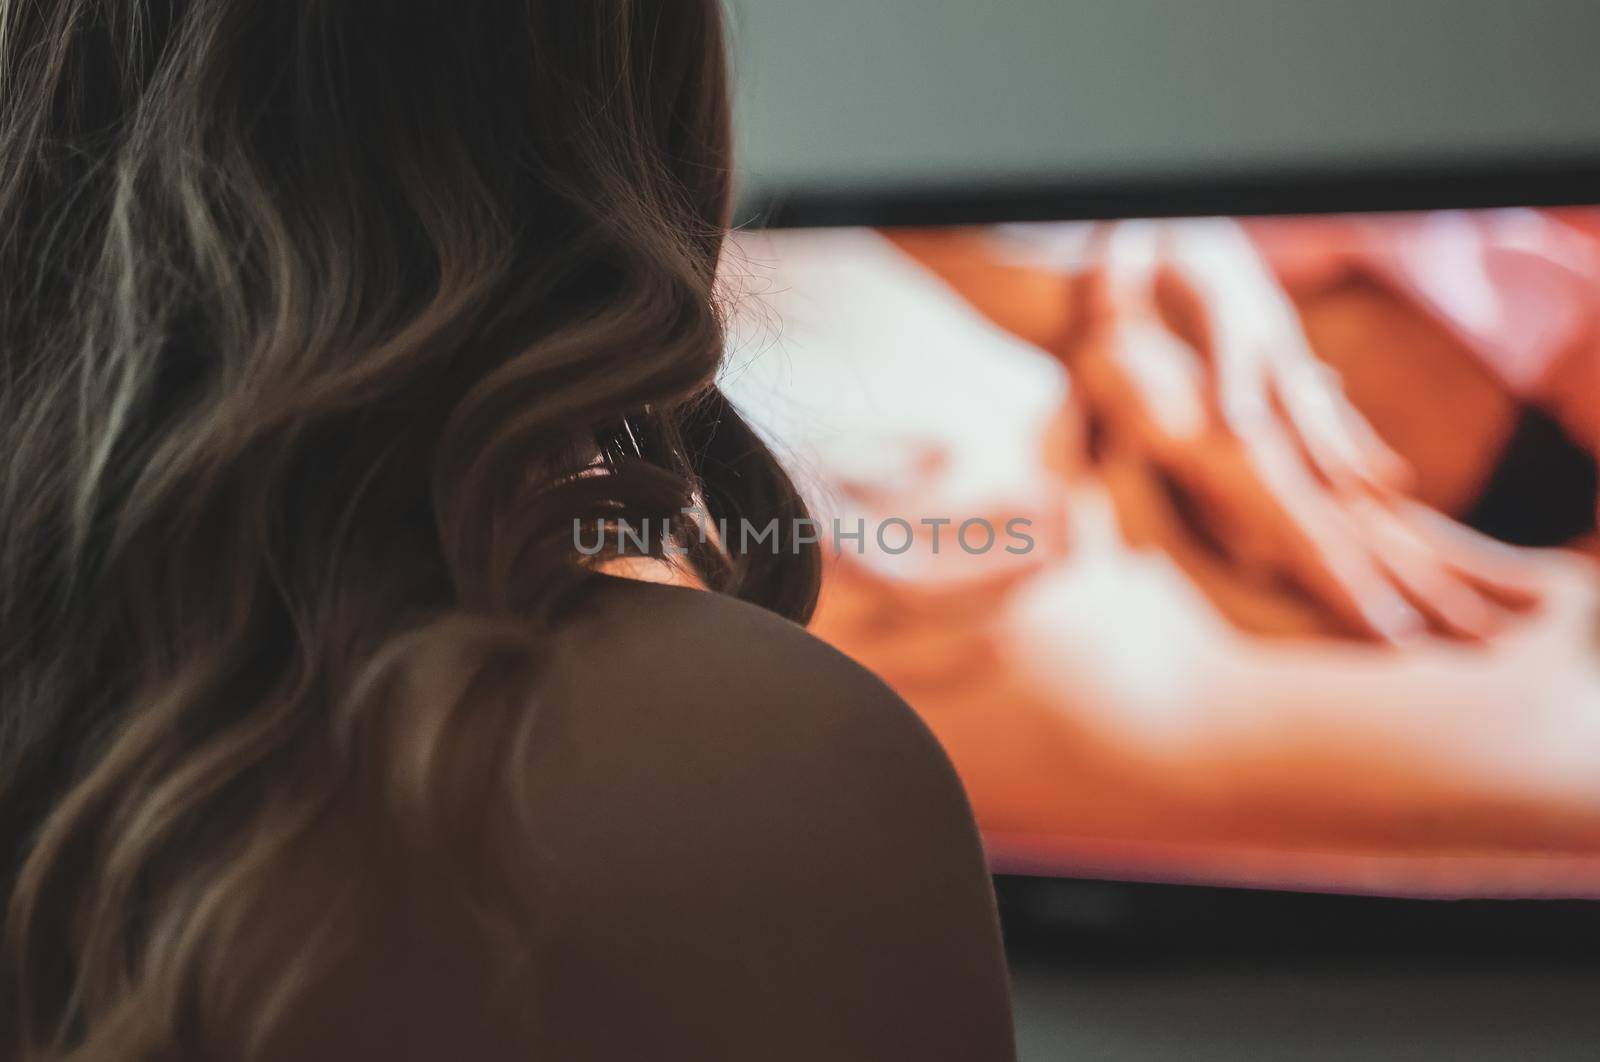 Woman watching erotic film on TV.